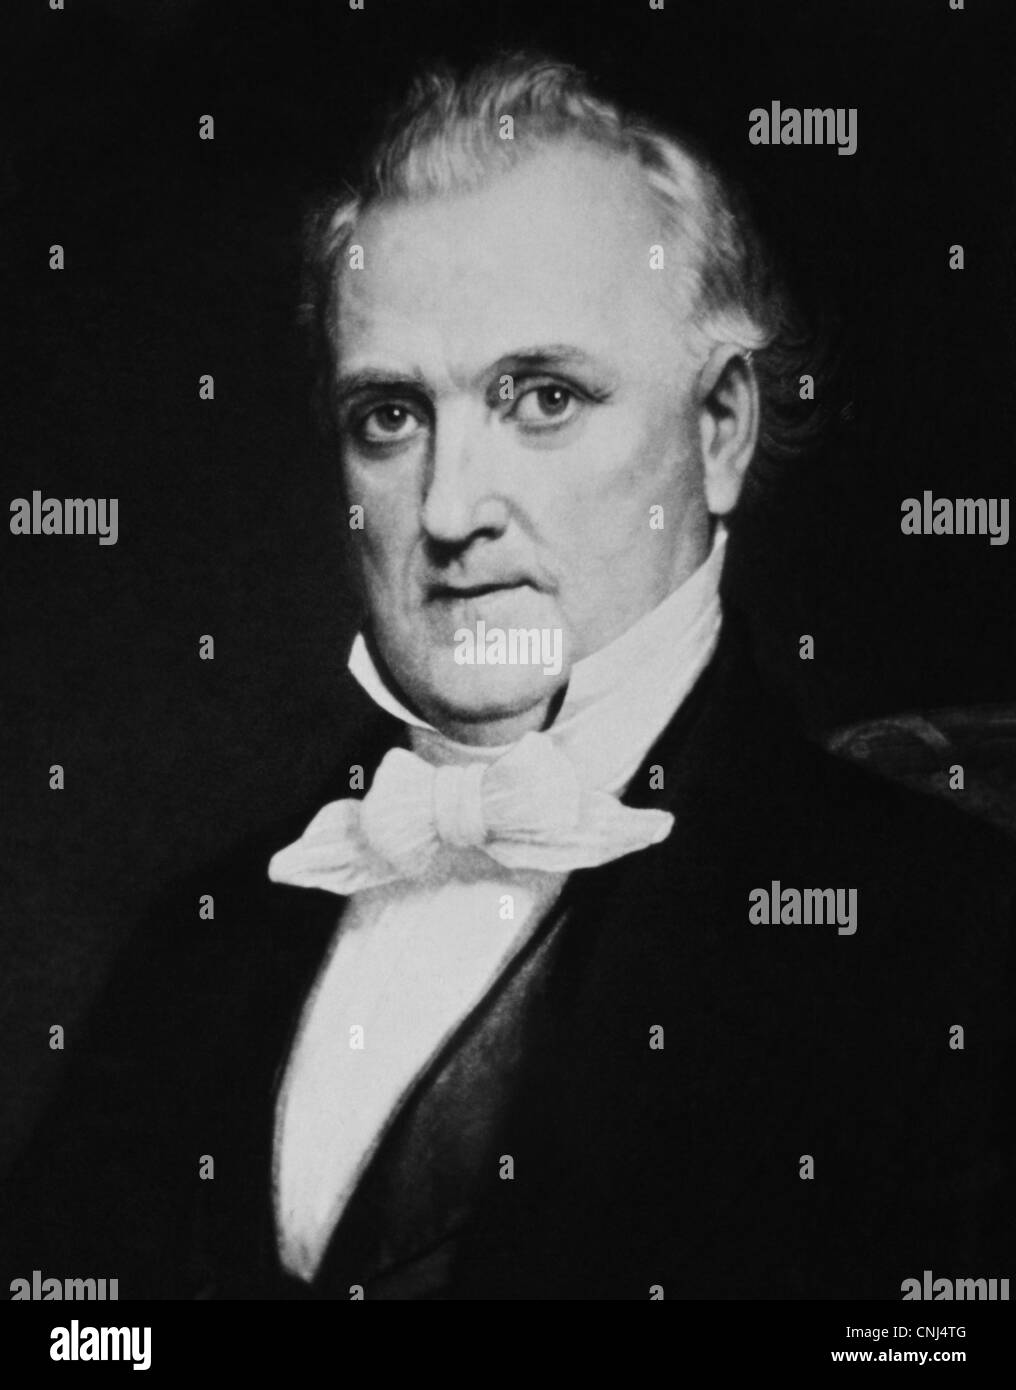 Vintage Daguerreotypie-Portraitfoto von James Buchanan (1791 – 1868) – dem 15. US-Präsidenten (1857 - 1861). Foto ca. 1857. Stockfoto